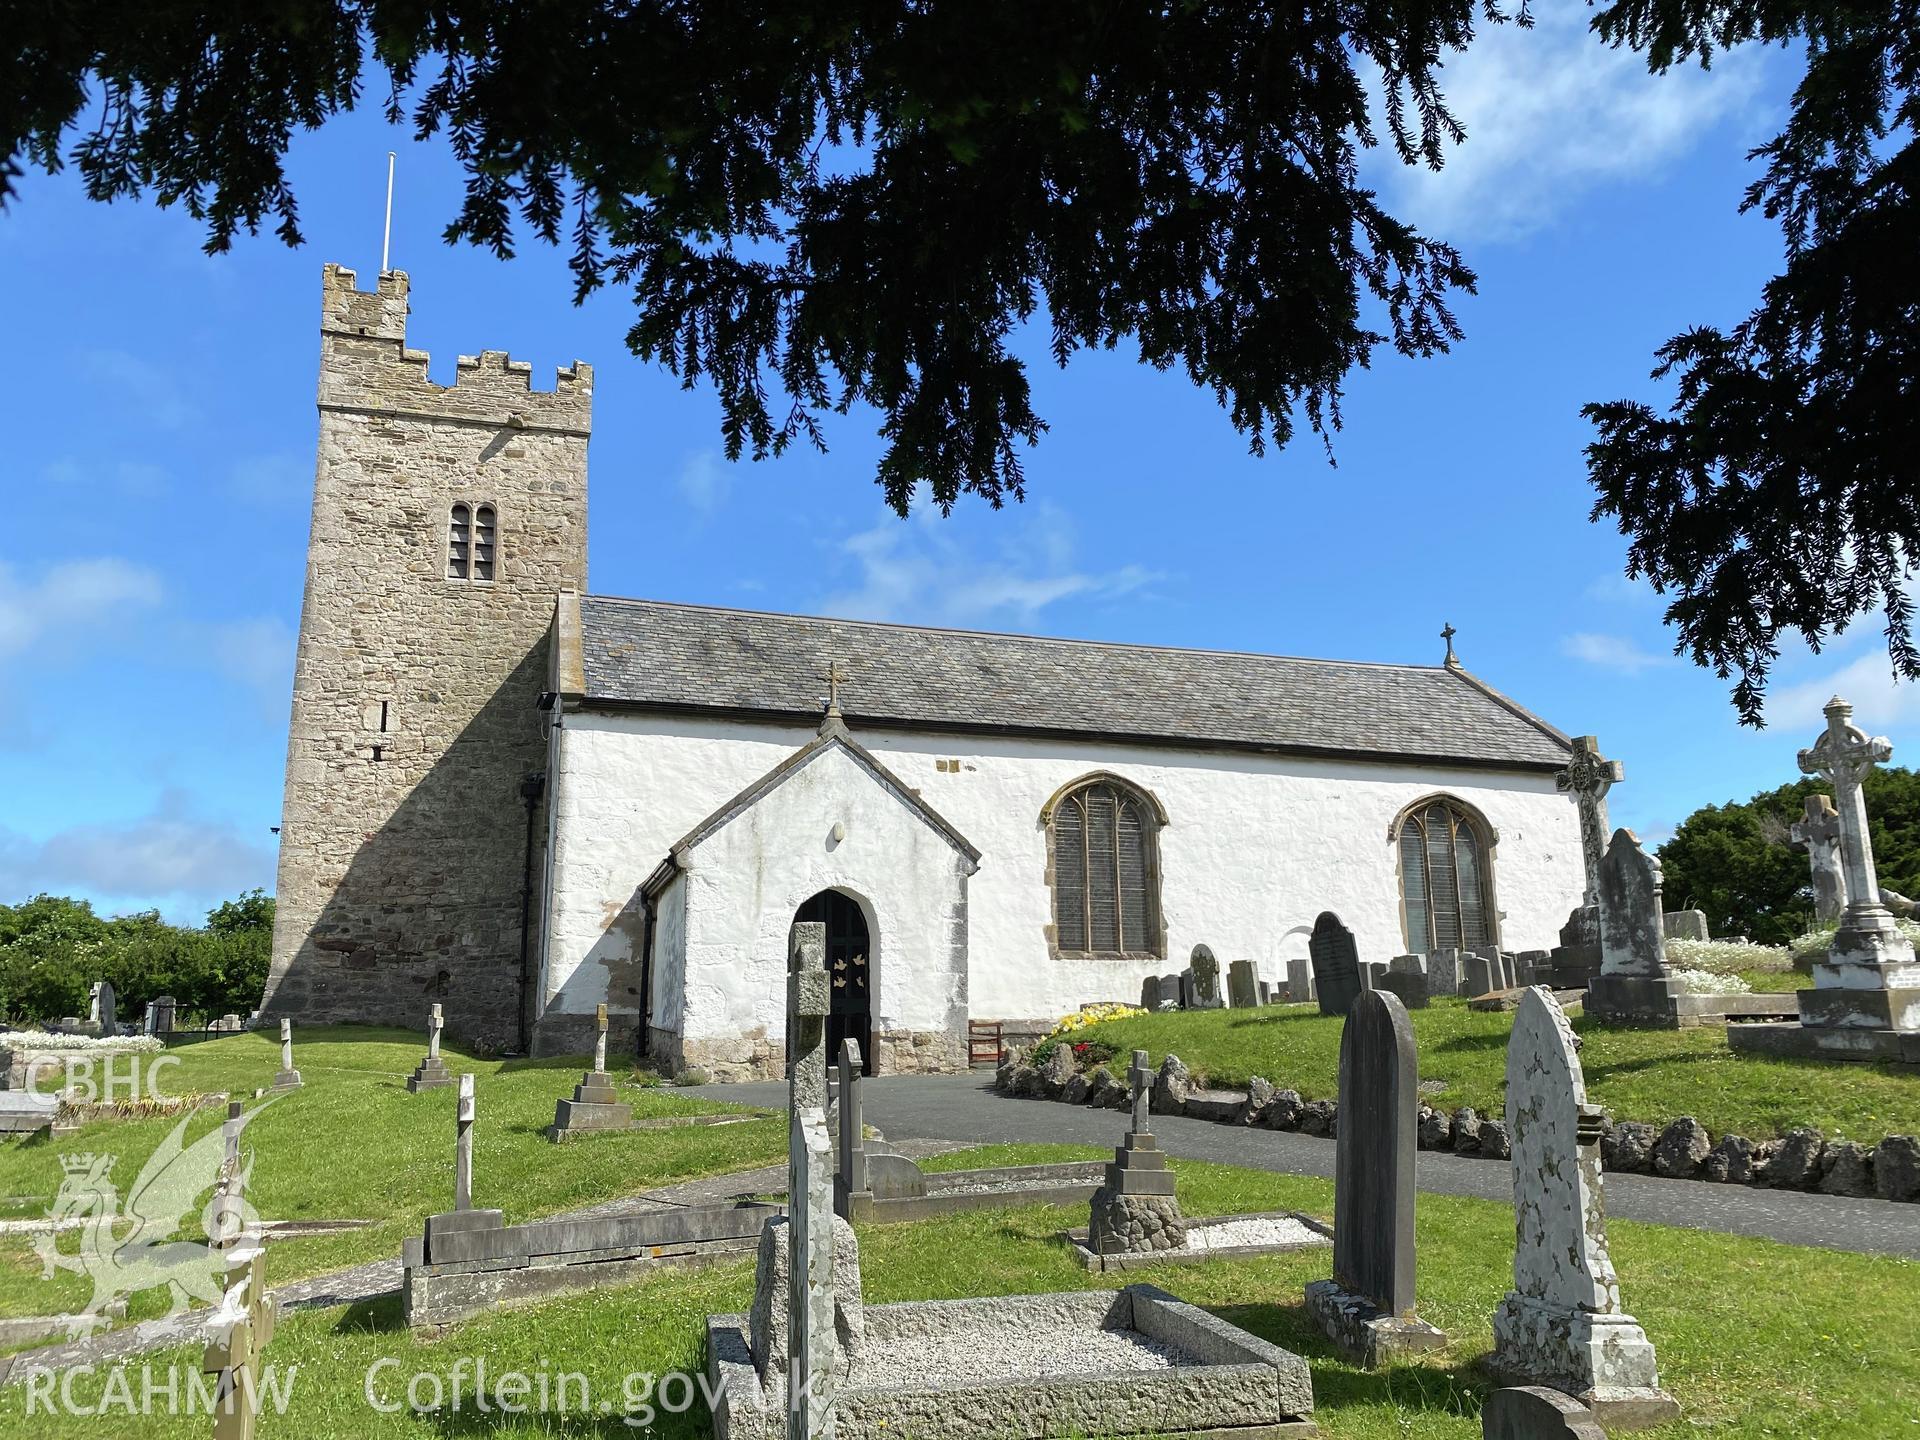 Digital colour photograph showing St Trillo's church, Llandrillo yn Rhos, produced by Paul R Davis in 2021.